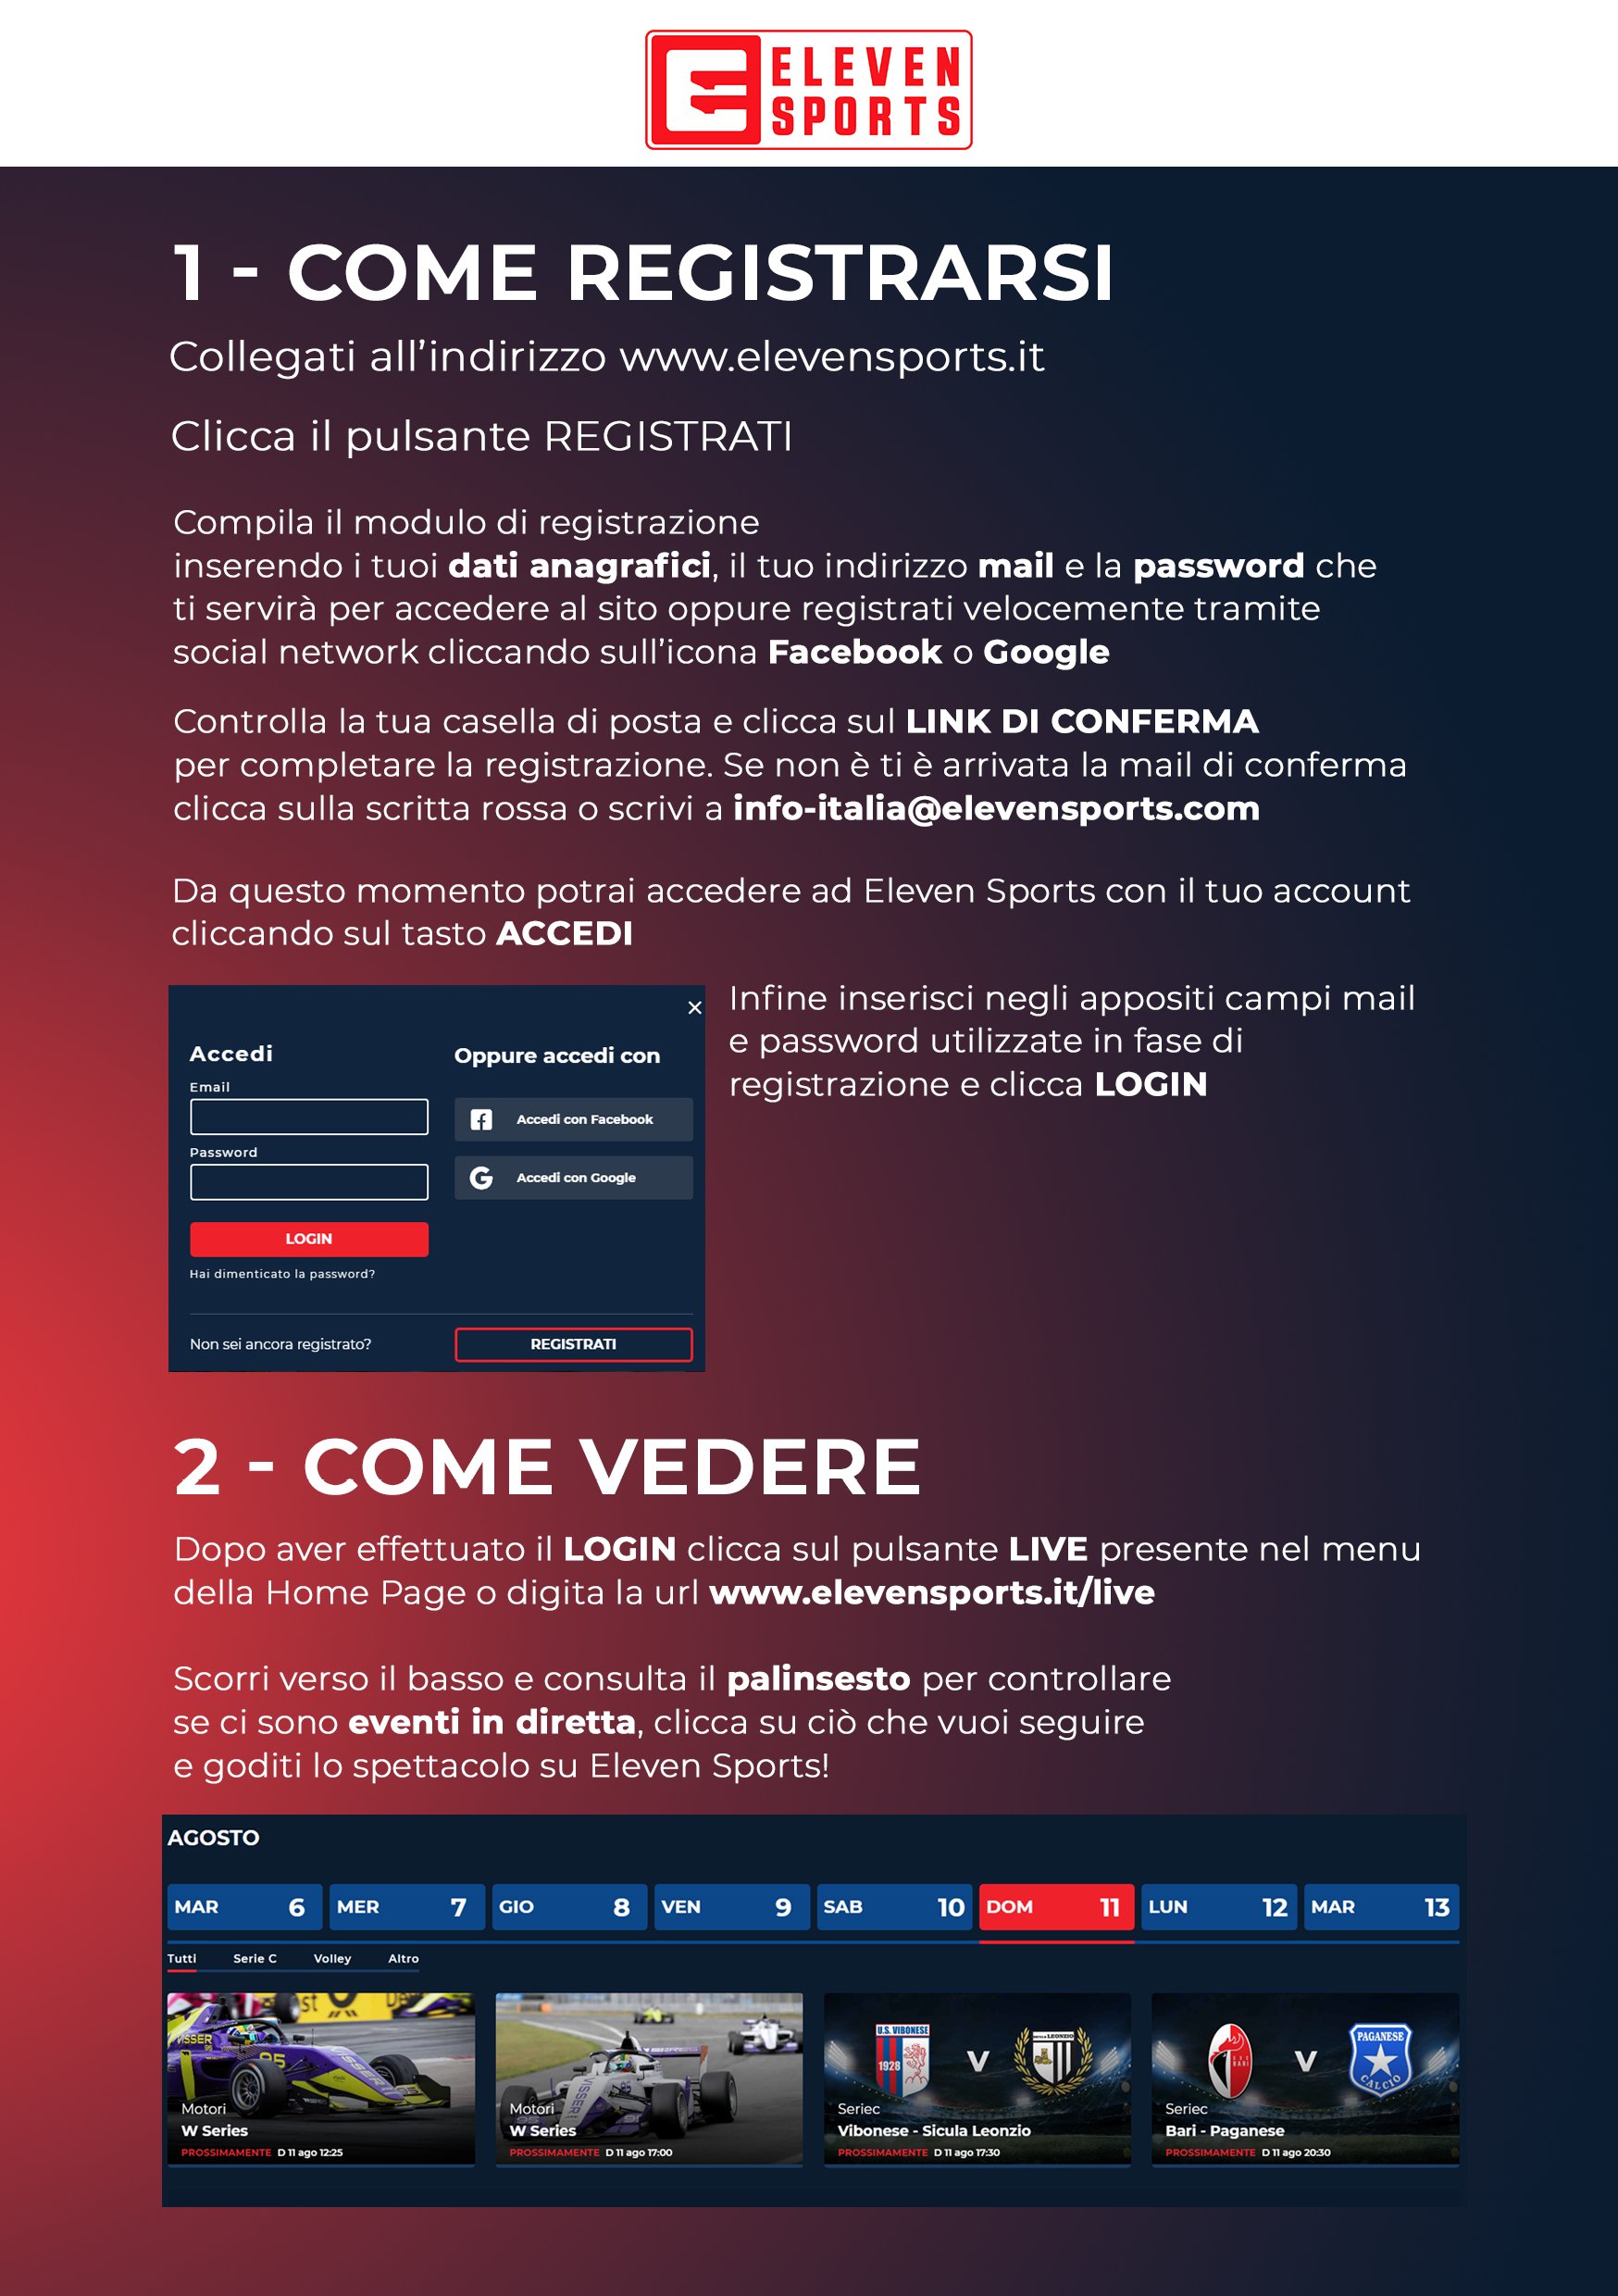 Serie C TV, Ottavi Coppa Italia - Programma e Telecronisti Eleven Sports